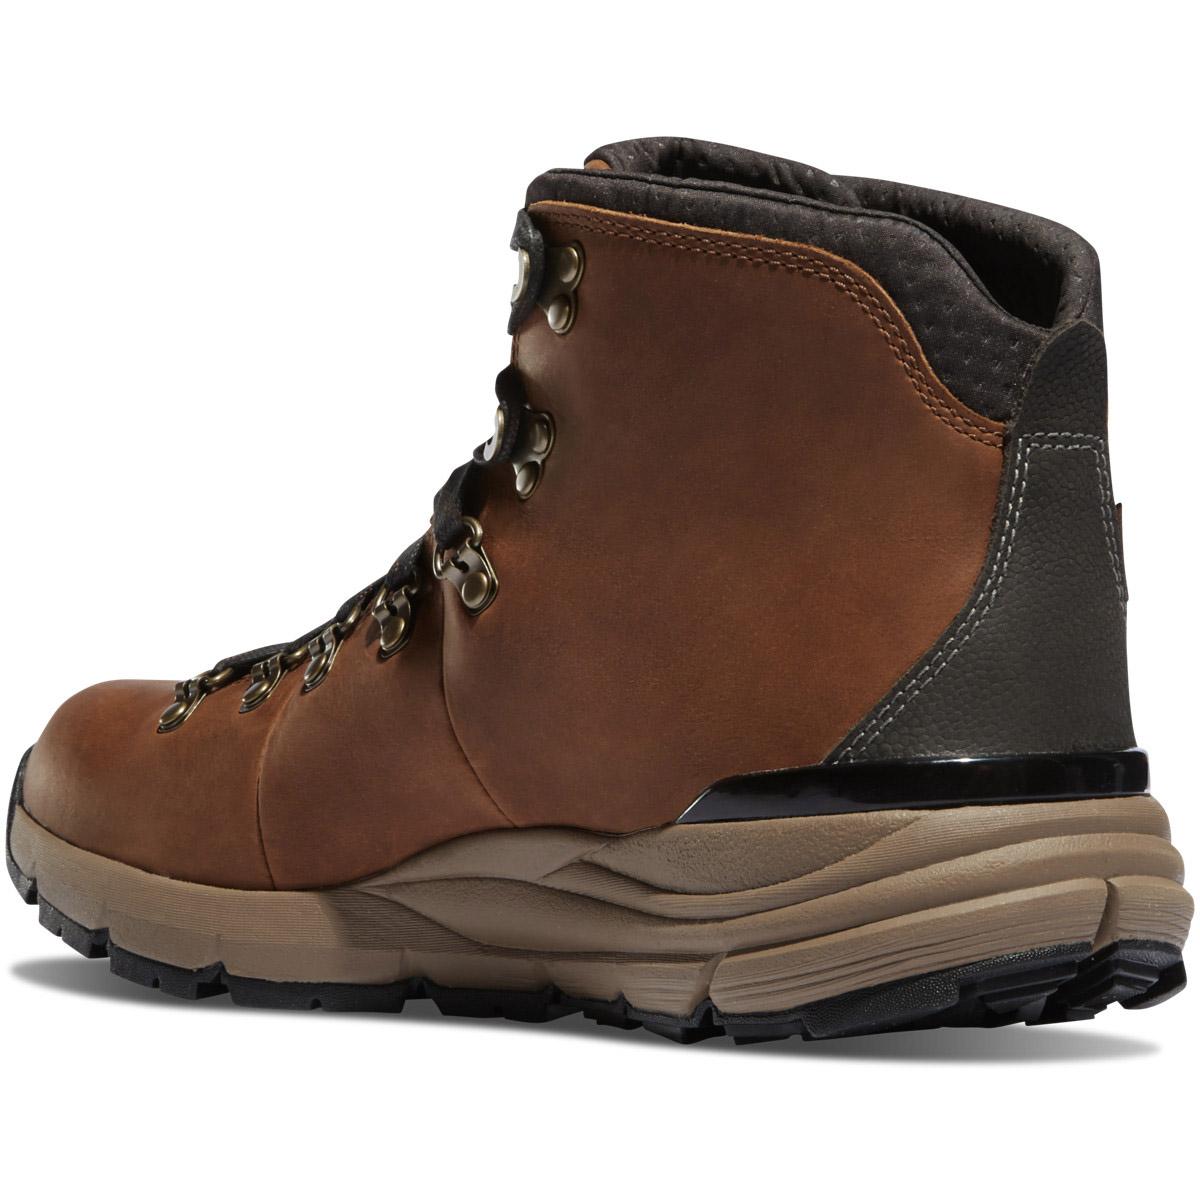 Danner Mountain 600 Full Grain Hiking Boot - Men's | SkiCountrySports.com